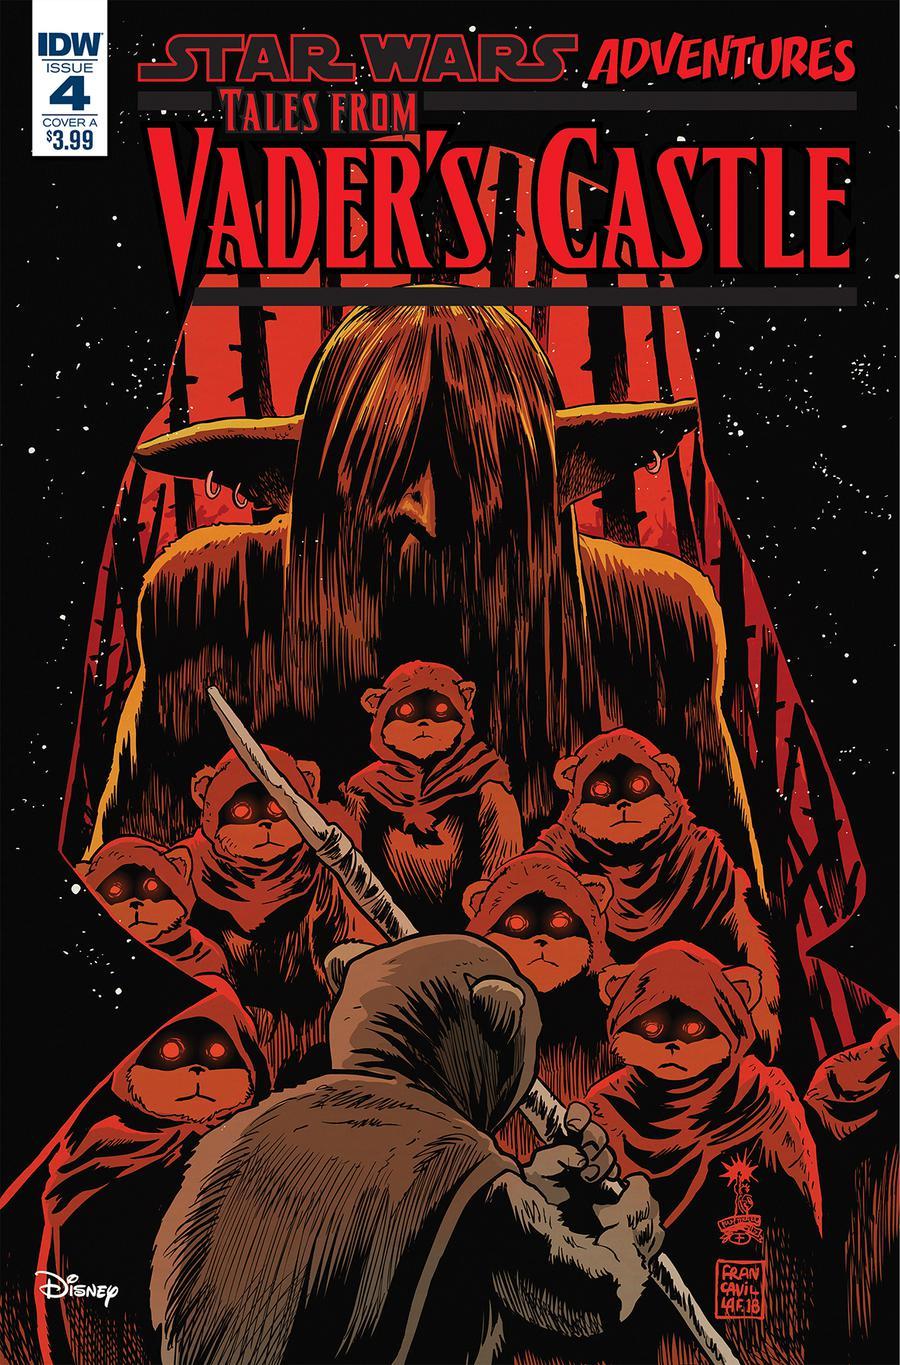 Star Wars Adventures Tales From Vaders Castle Vol. 1 #4